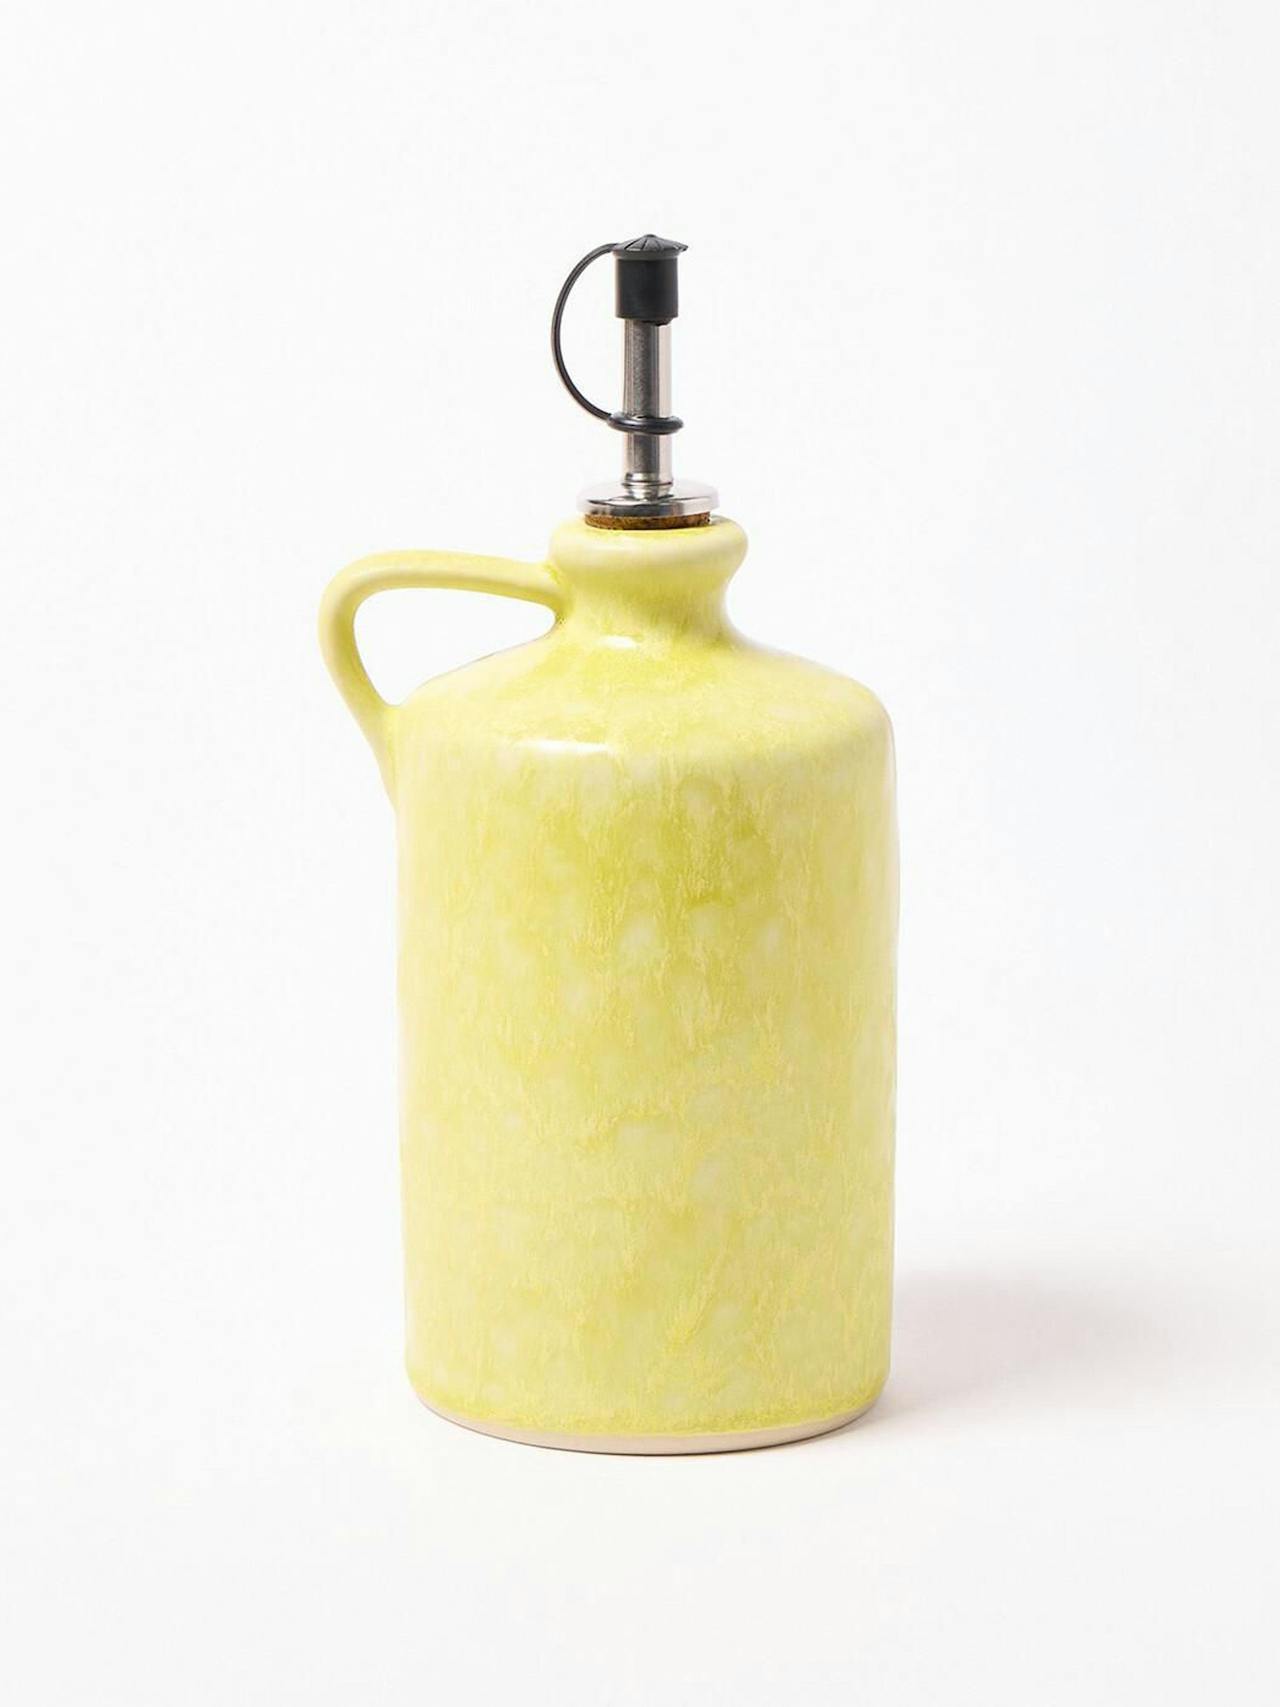 Mori yellow ceramic oil bottle